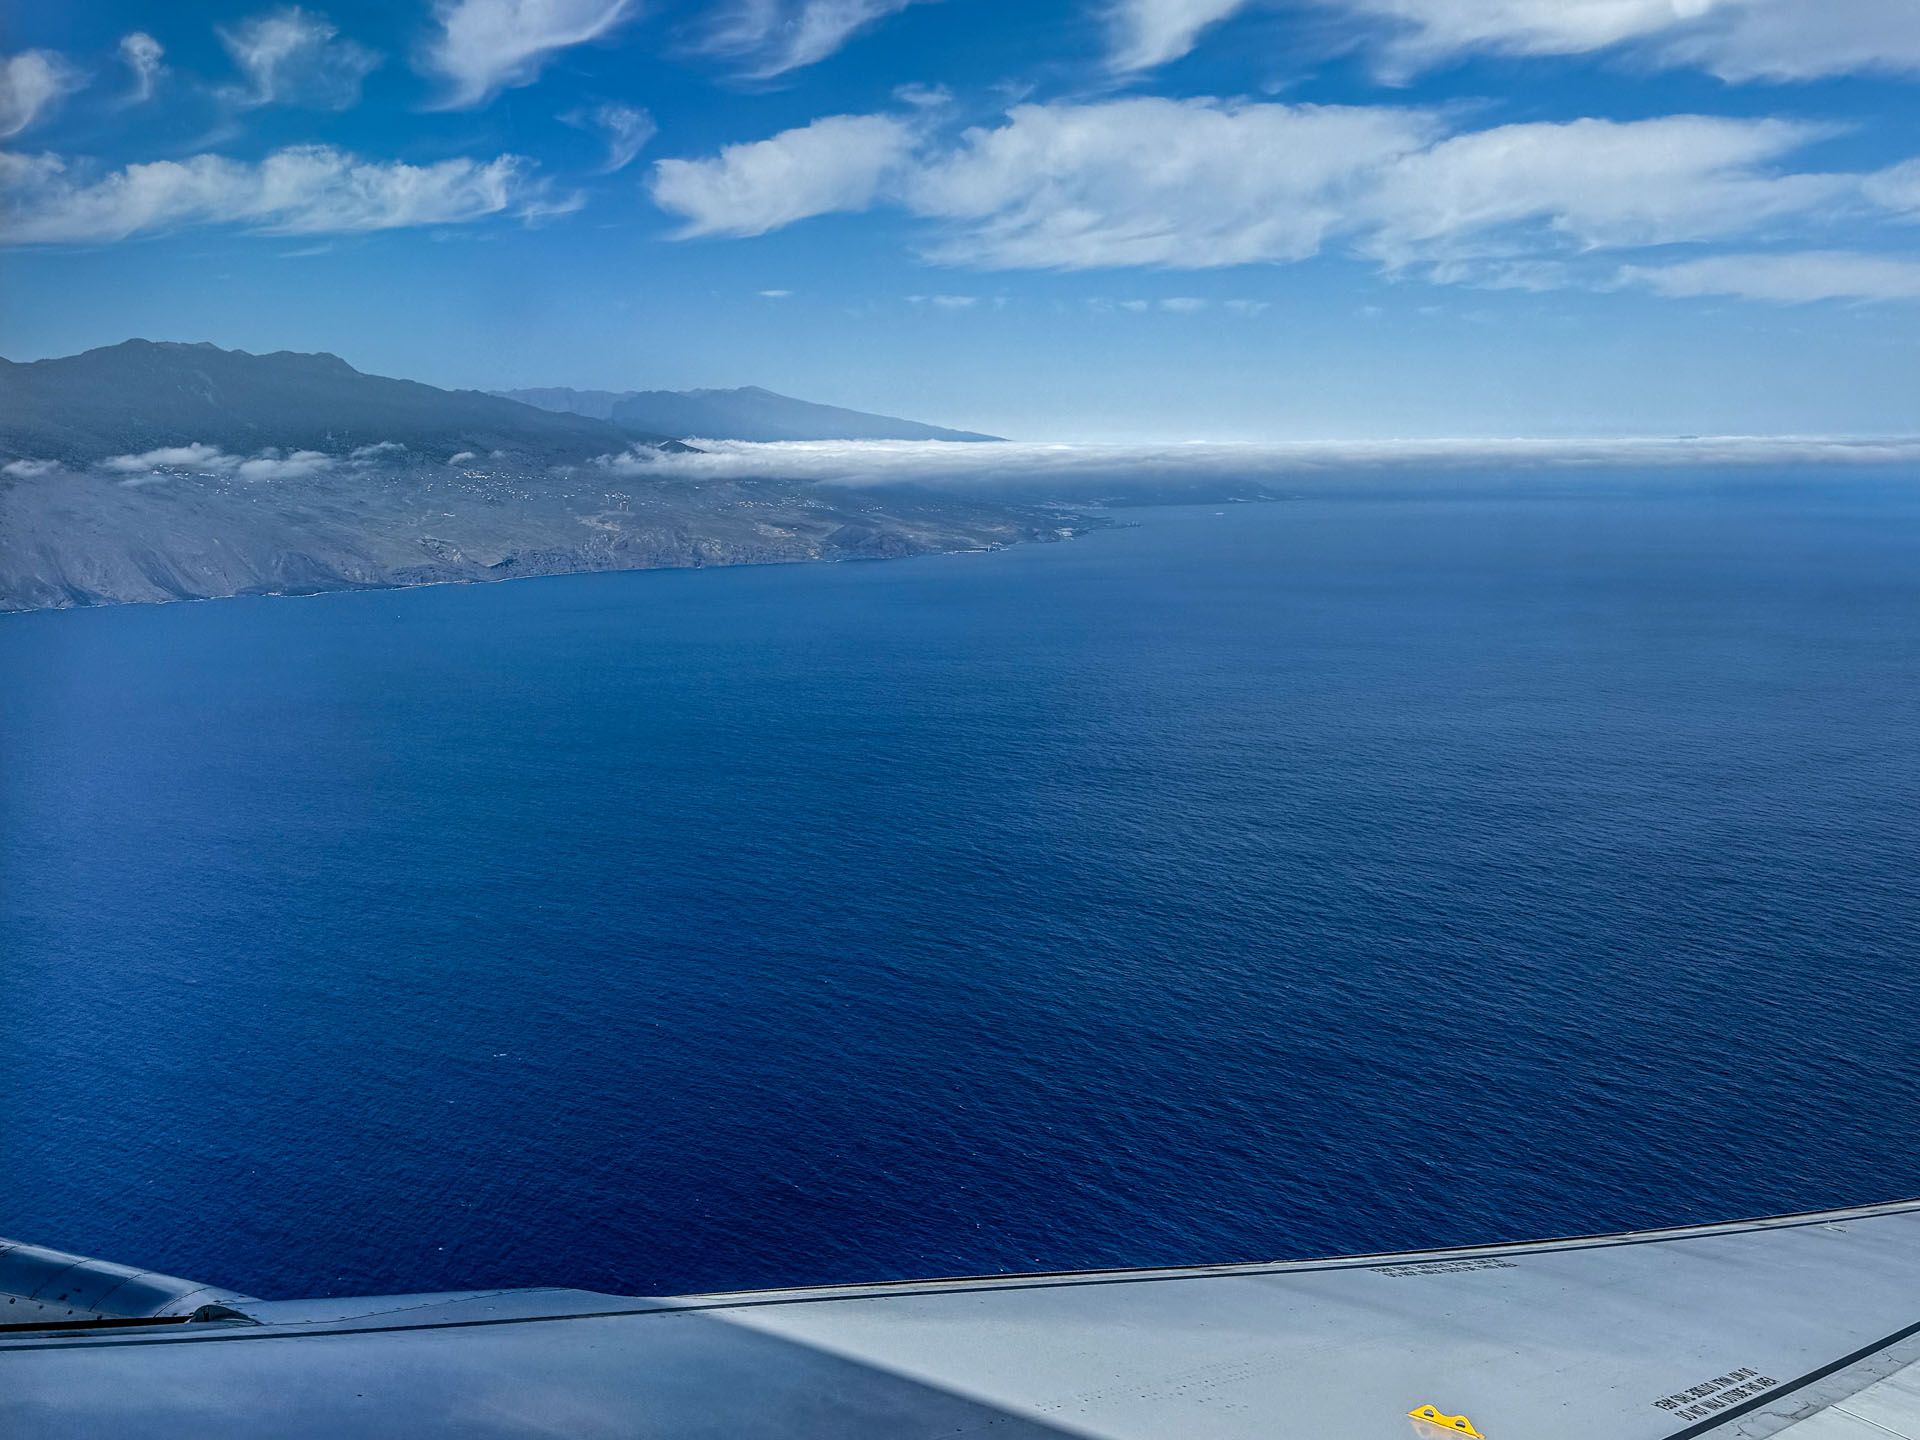 Anflug auf La Palma